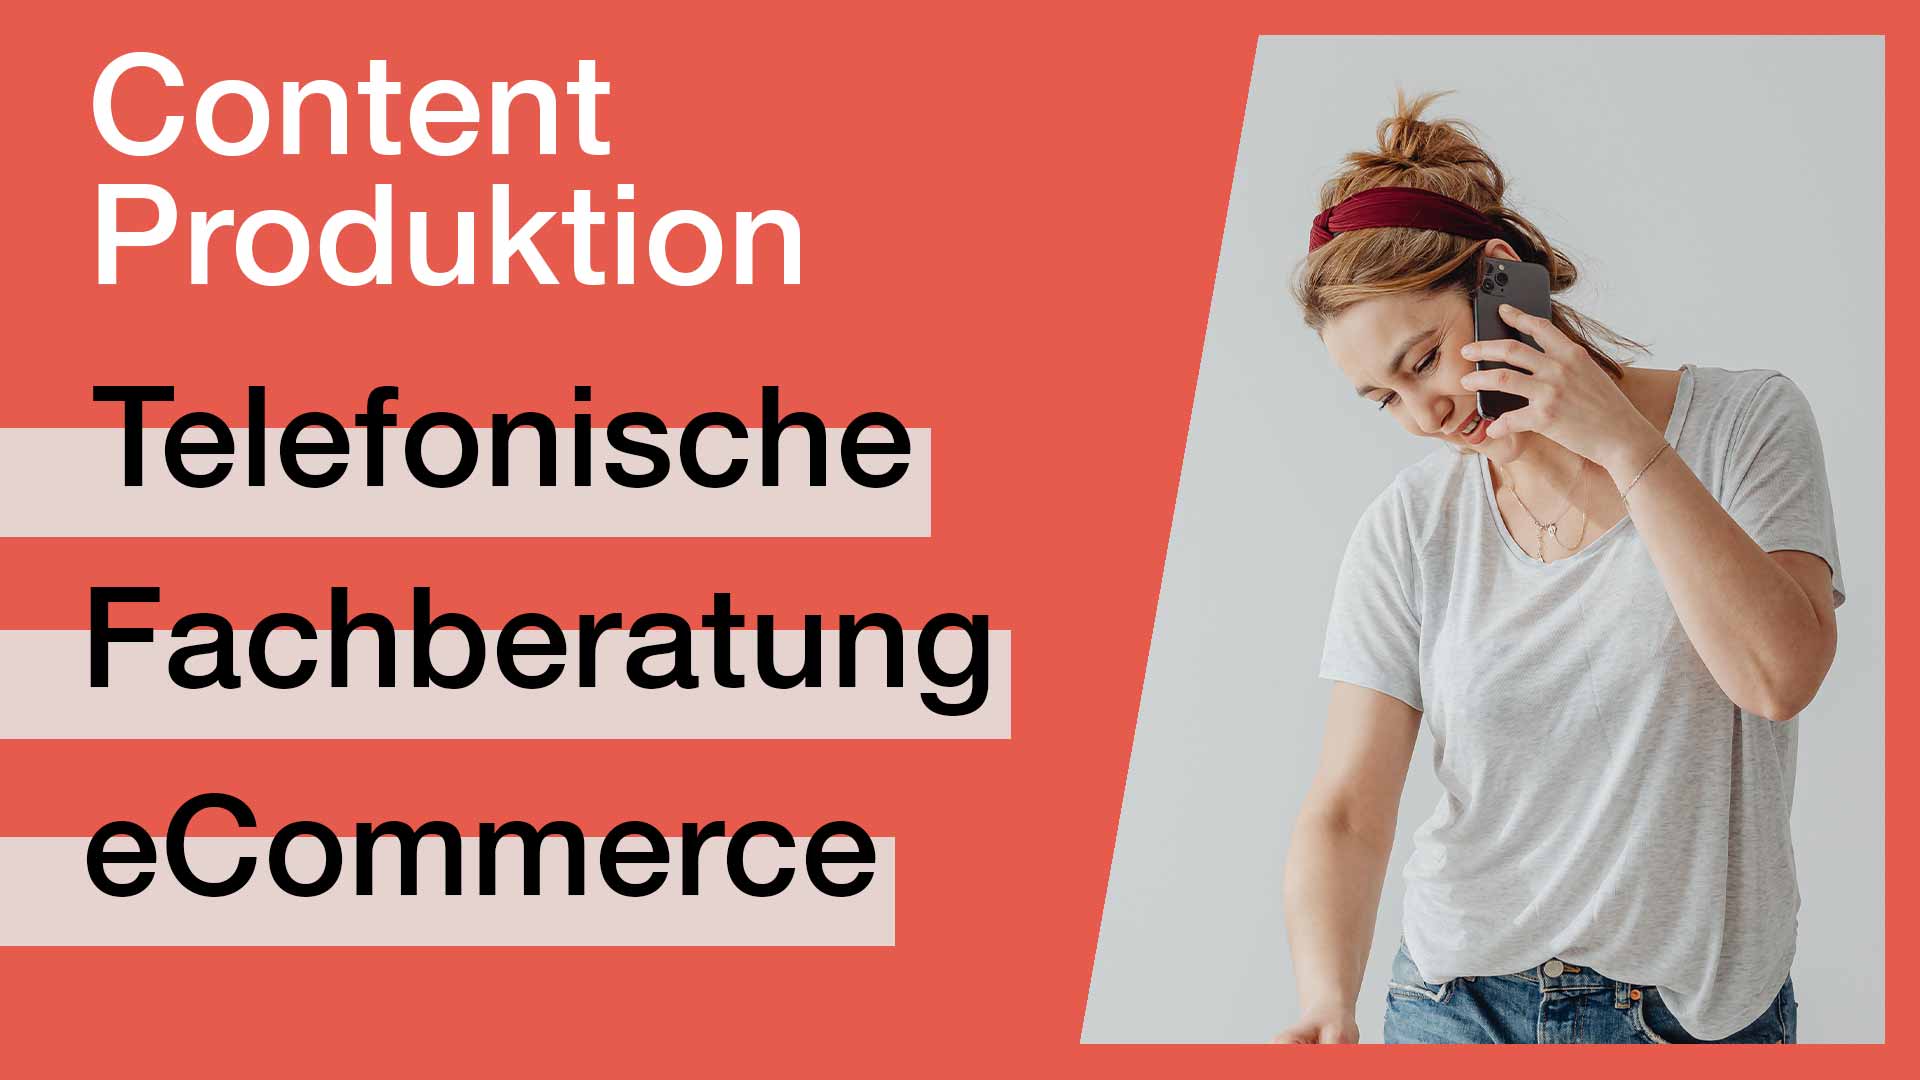 content_production_telefonische_Fachberatung_ecommerce_roter_Hintergrund_Frau_rechts